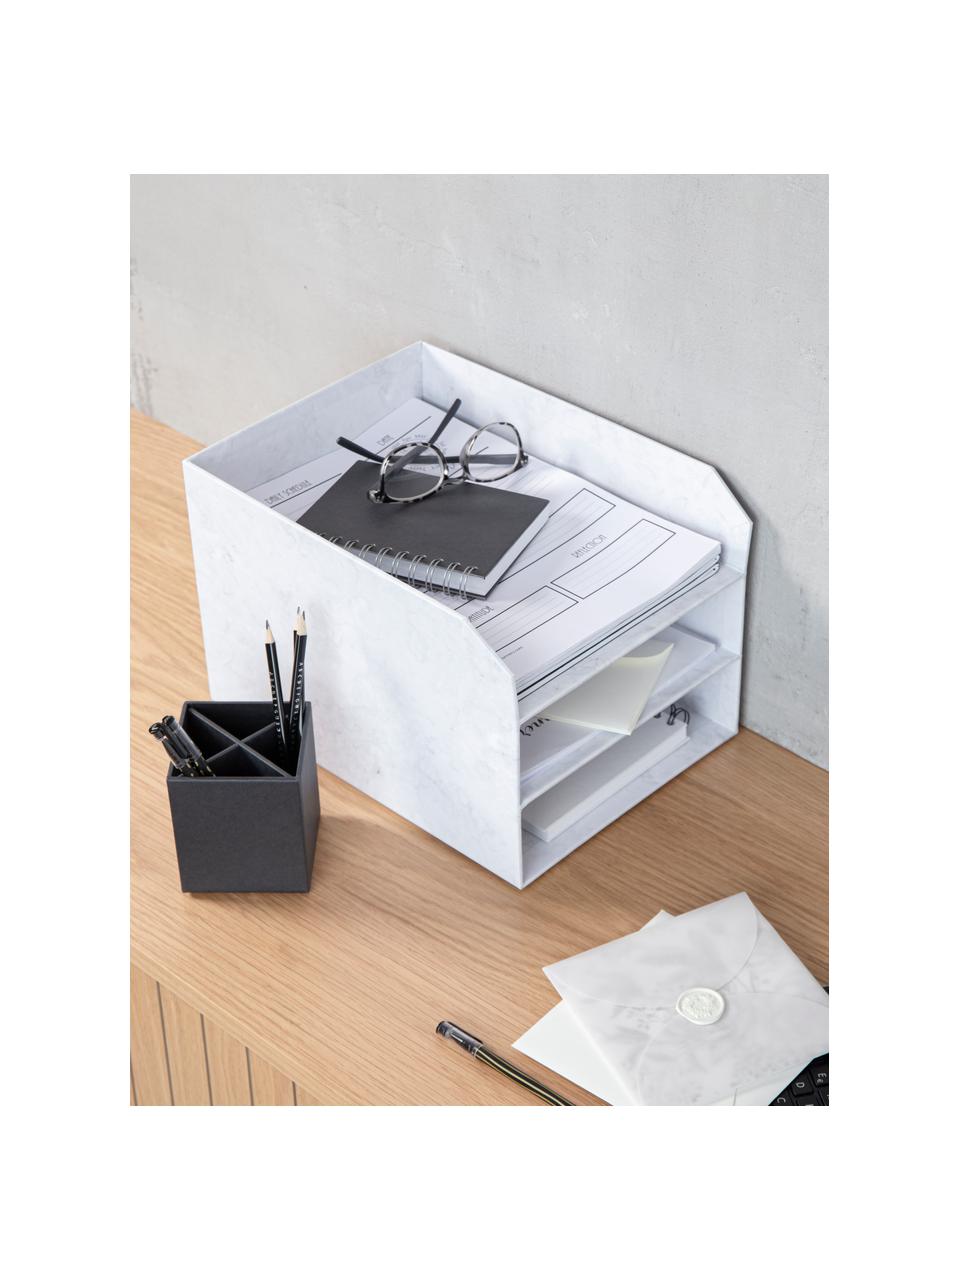 Dokumenten-Ablage Trey, Fester, laminierter Karton
(100 % recyceltes Papier), Weiss, marmoriert, B 23 x H 21 cm